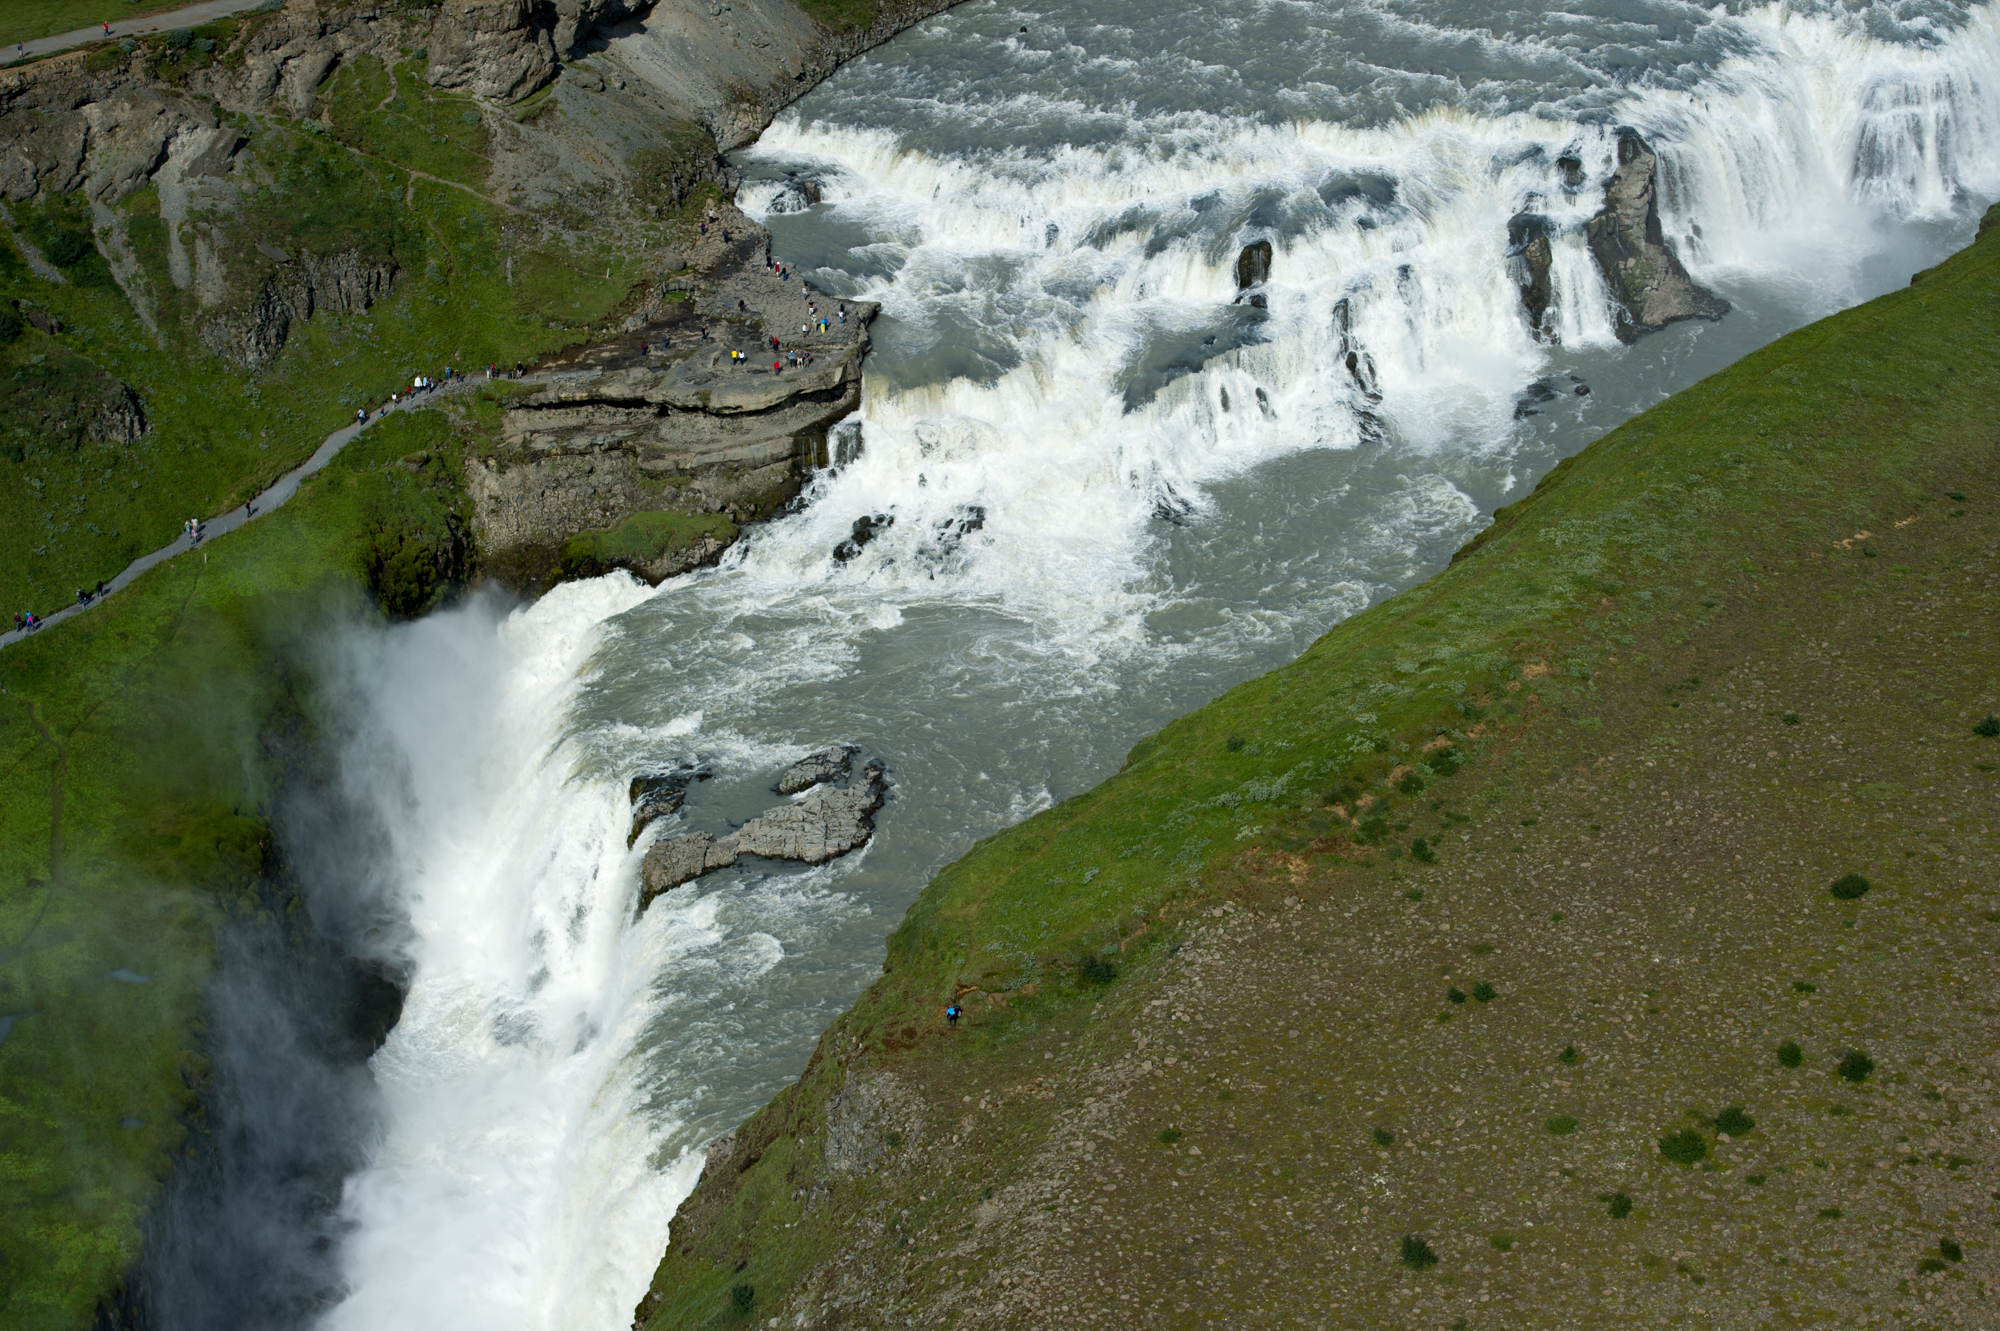 Gullfoss Waterfall